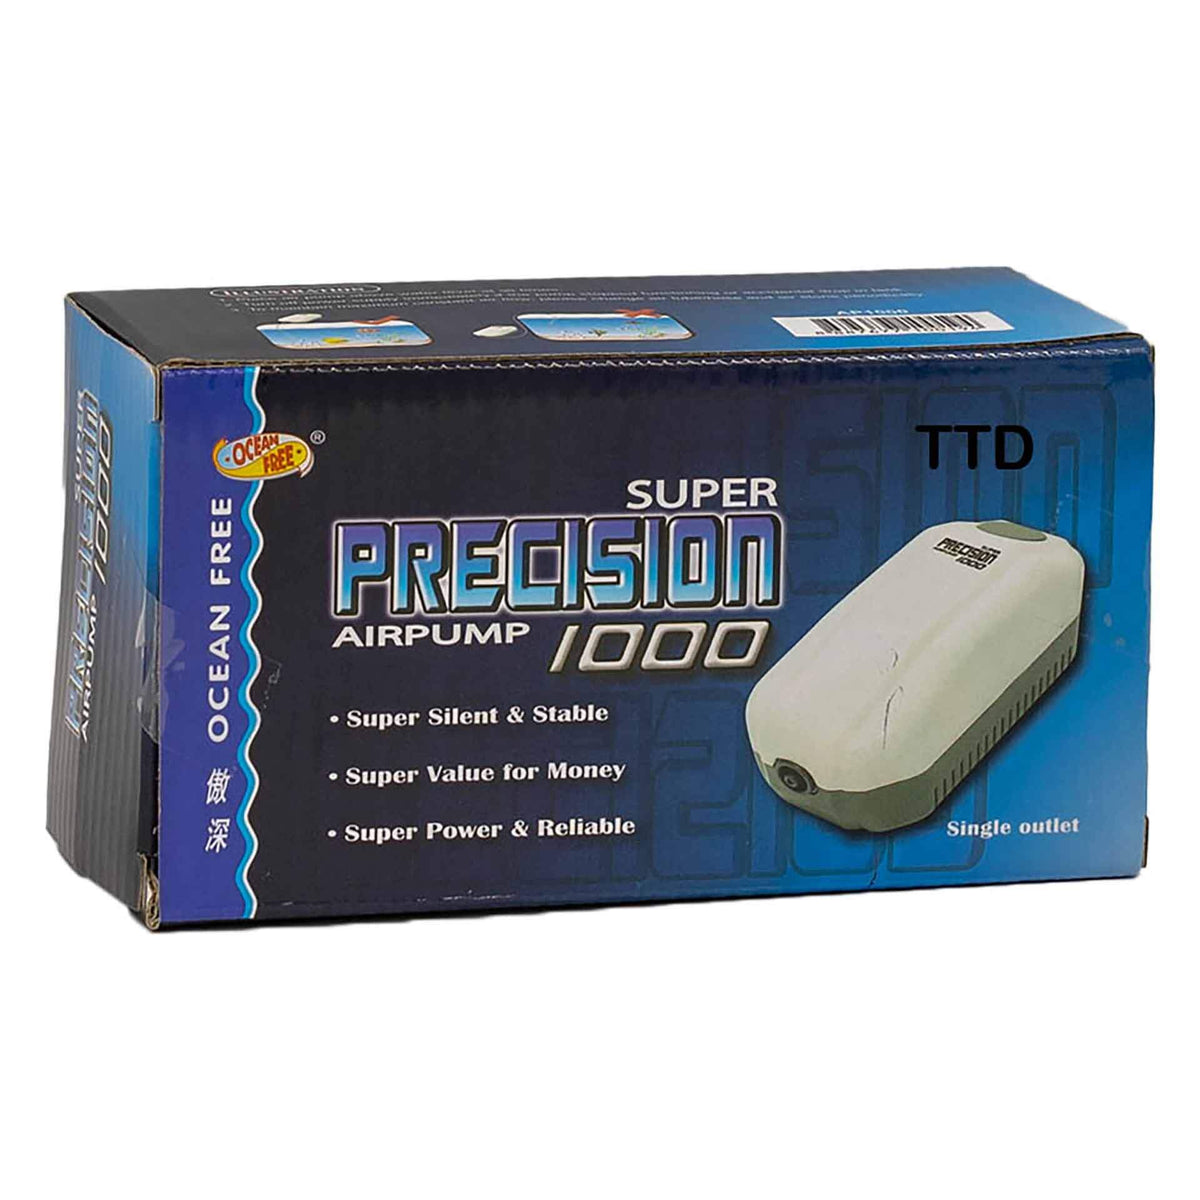 Ocean Free Super Precision Air Pump - 1000 Single outlet